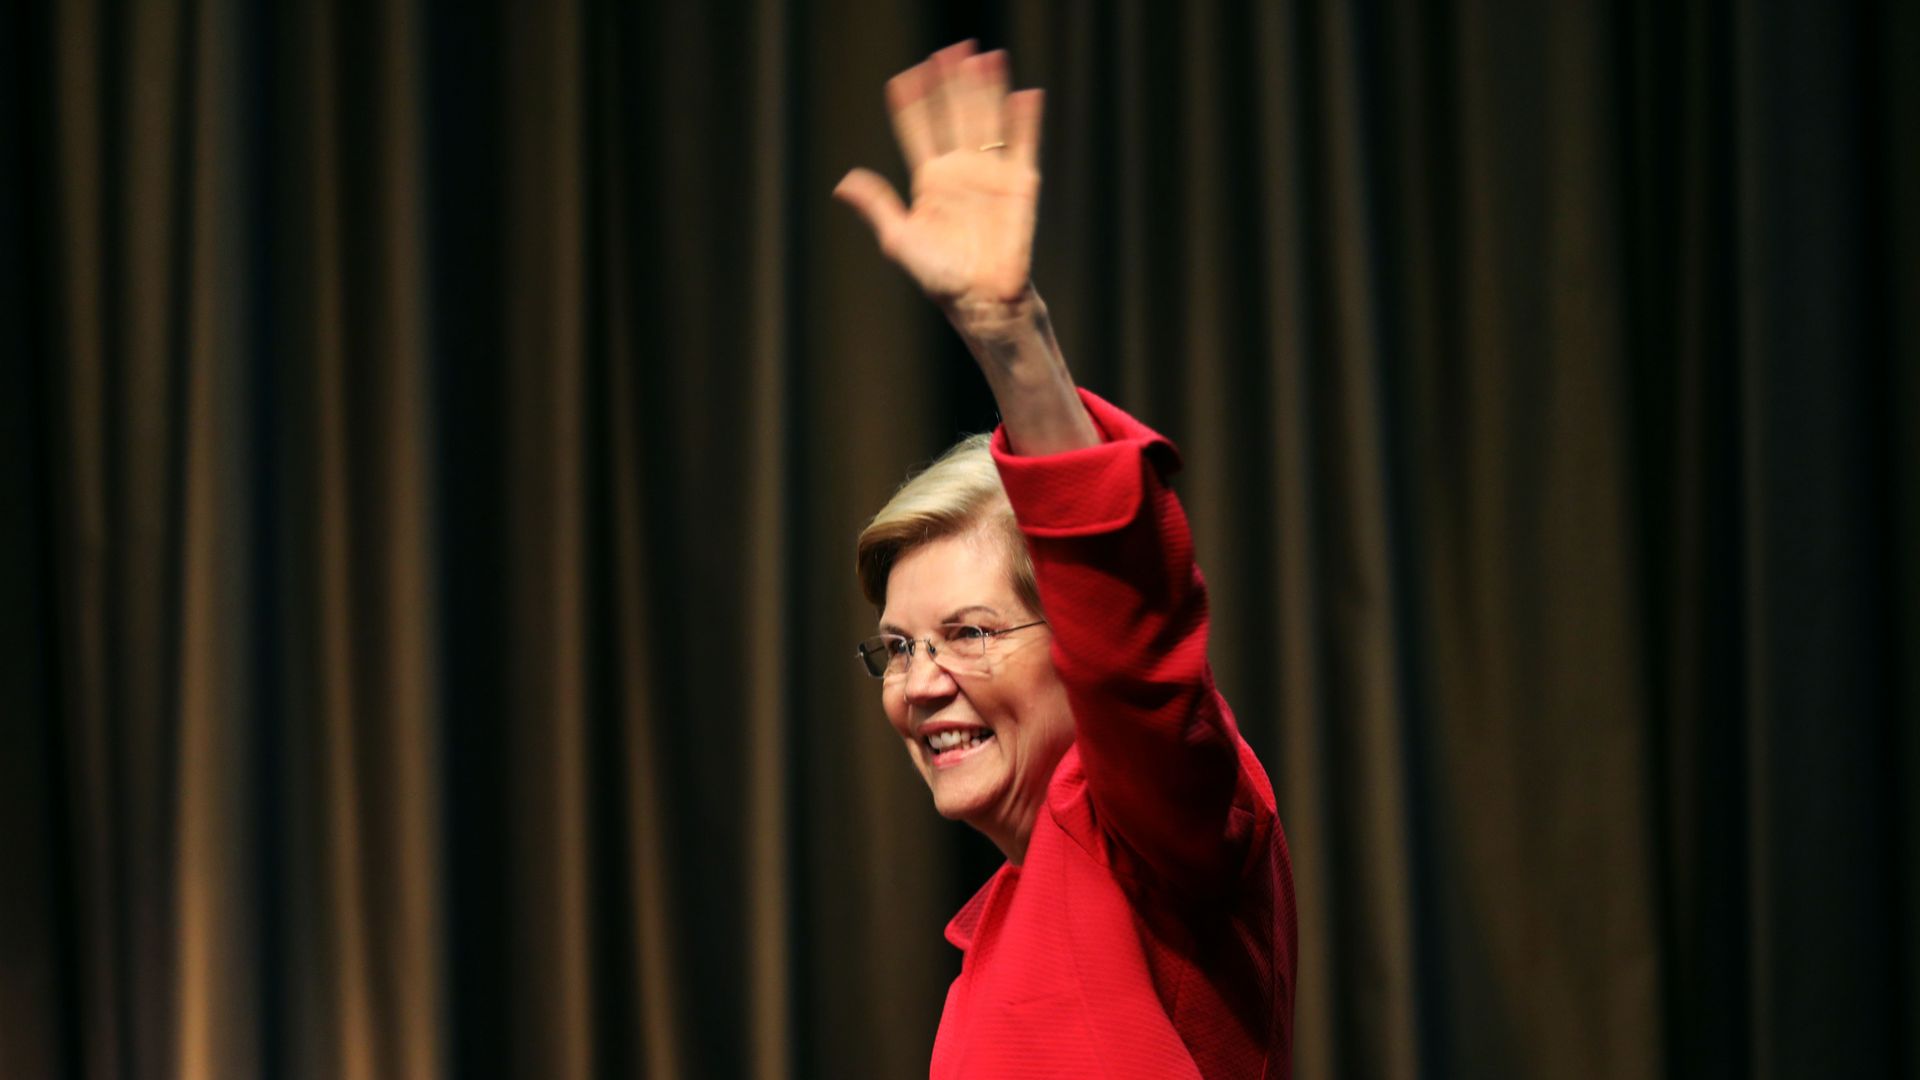 Presidential candidate Elizabeth Warren